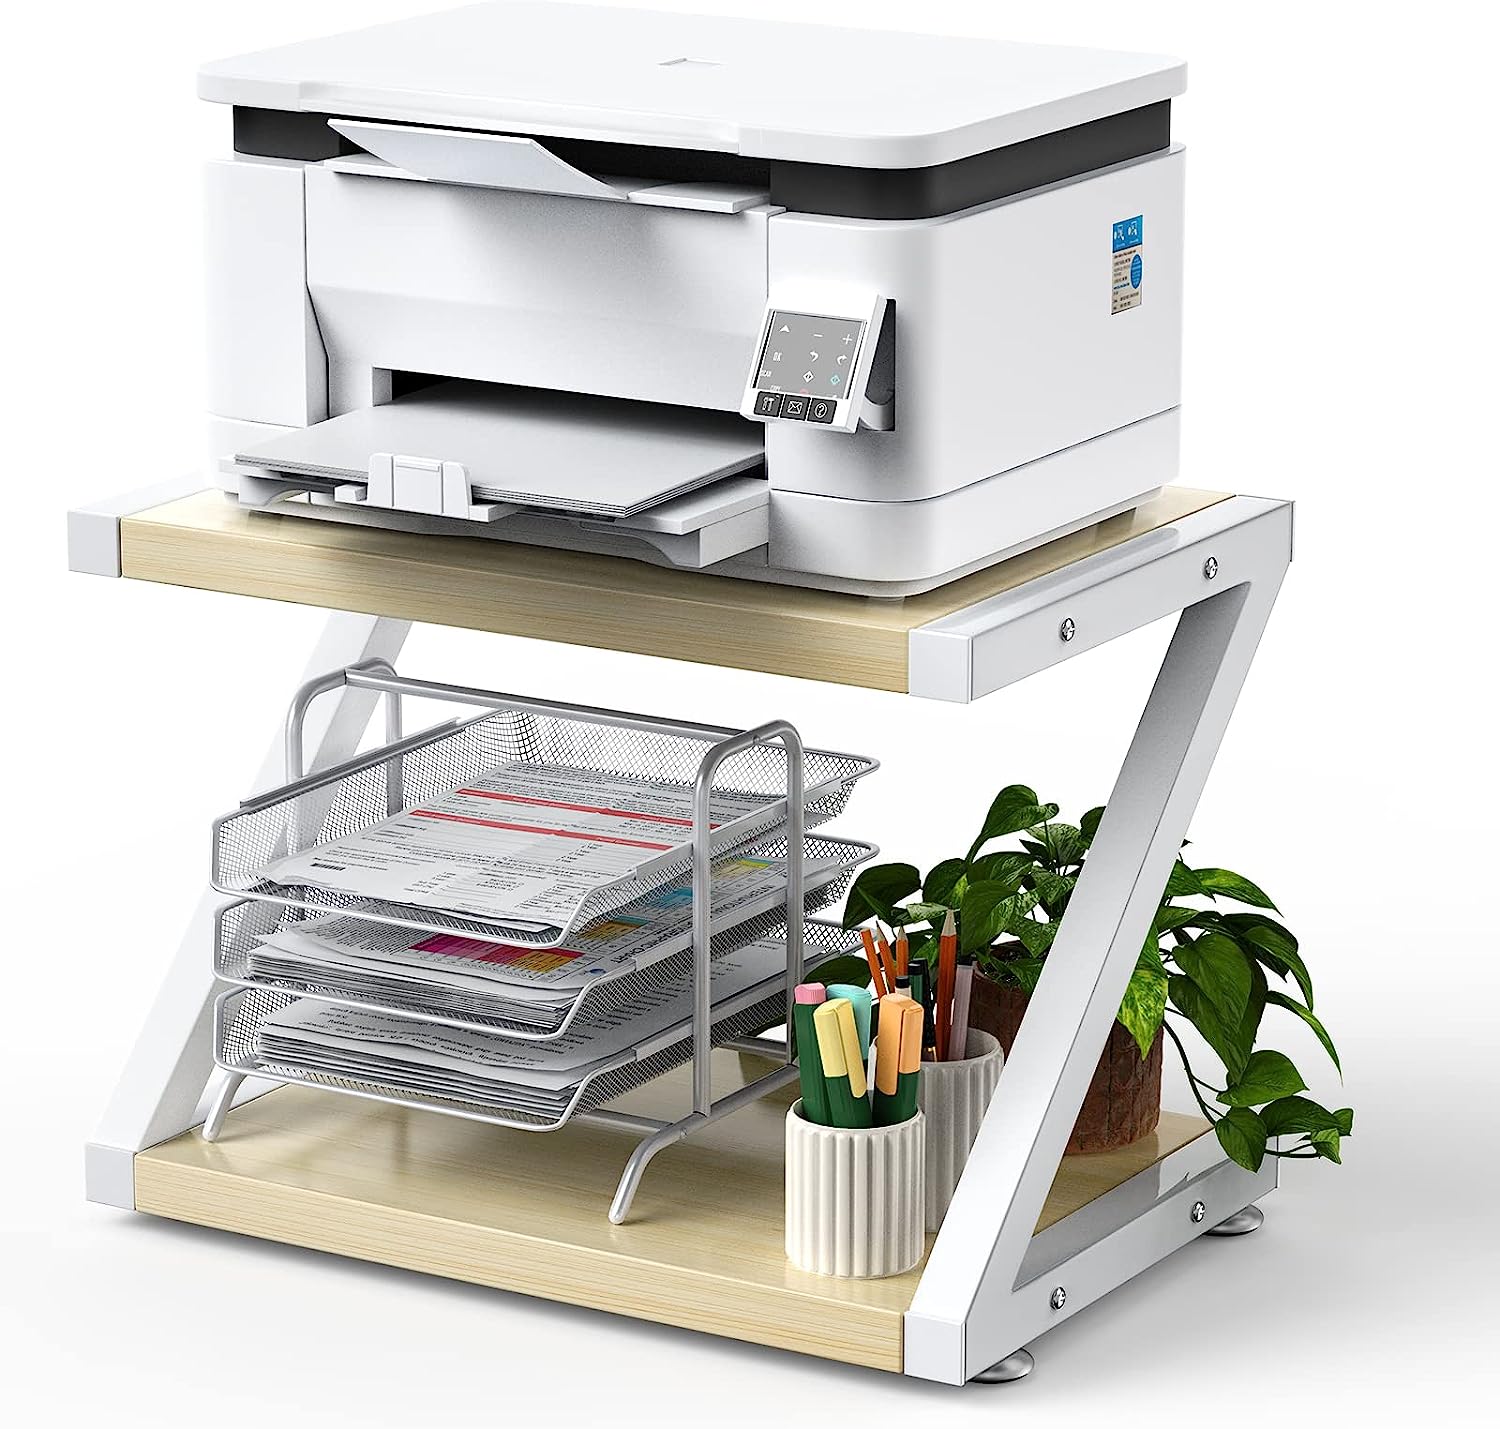 HUANUO Printer Stand, Desktop Stand for Printer, [...]